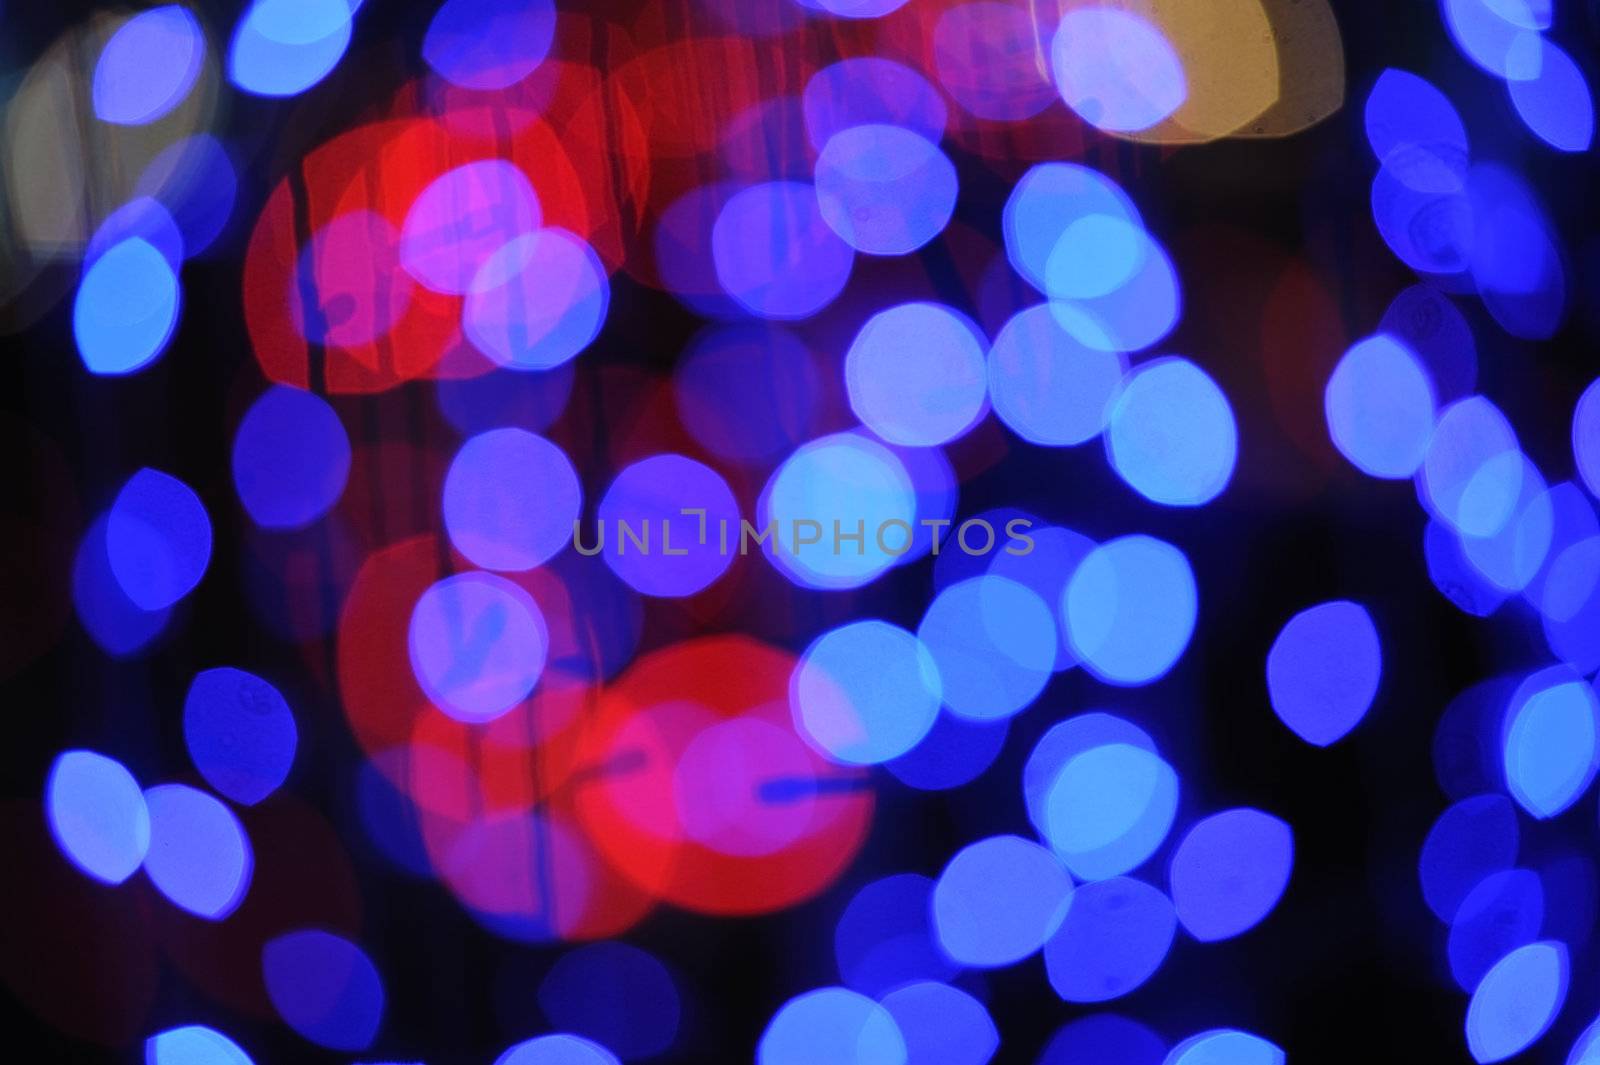 Abstract Christmas lights at Christmas night. by ngungfoto